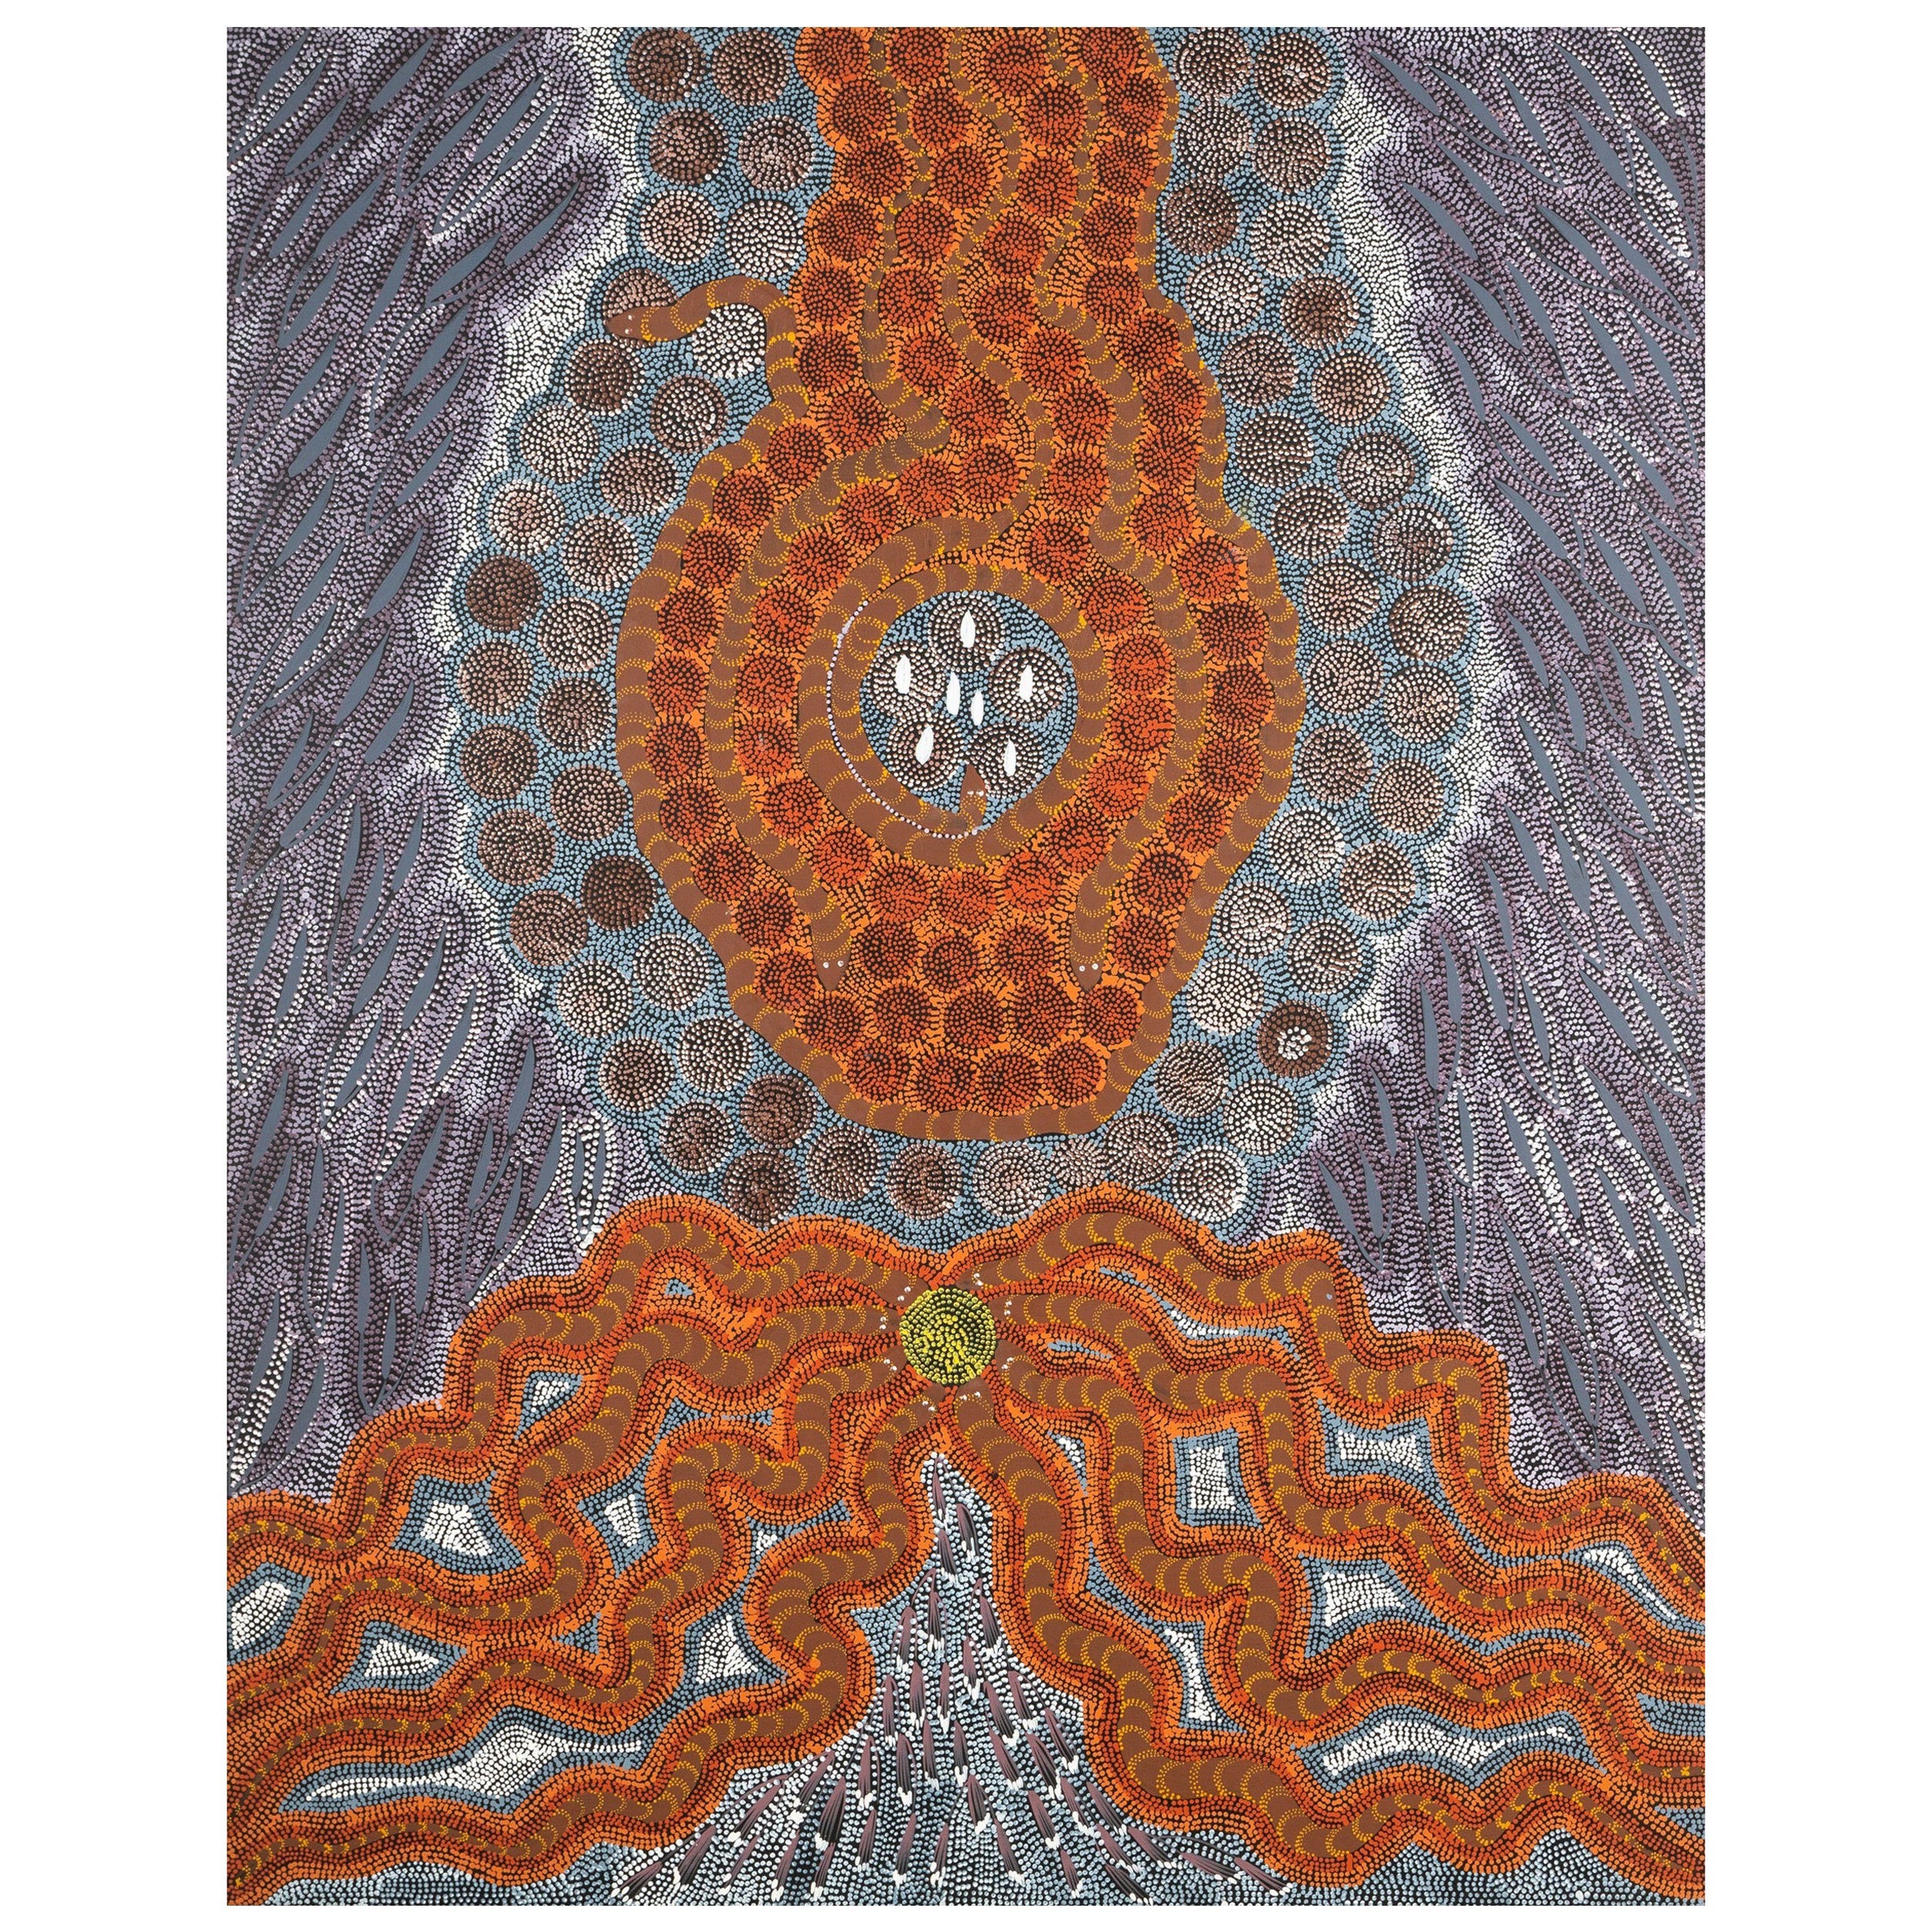 Australische australische Aborigine-Kunst Janet Forrester Ngala Gemälde Schlange & Milky Way Dream